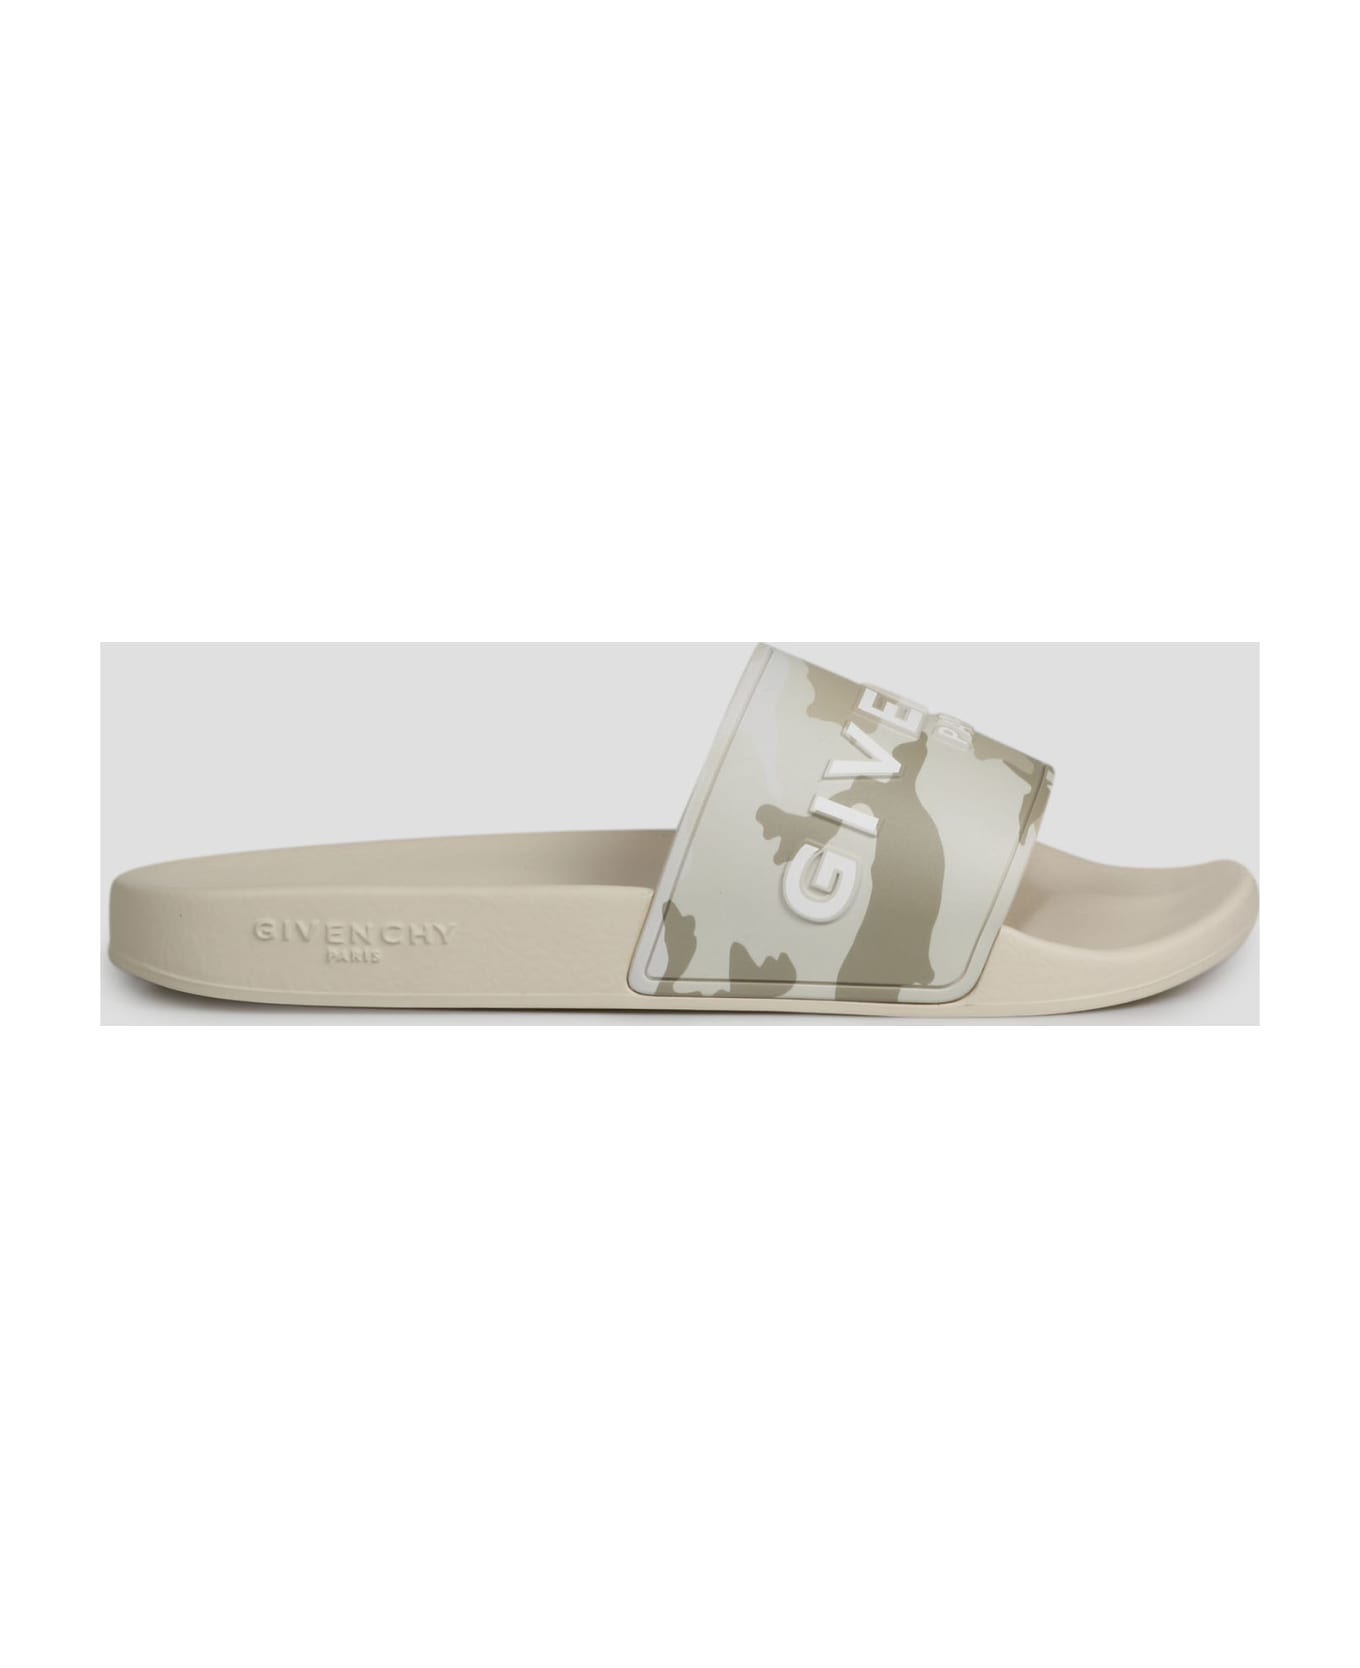 Givenchy Logo Slide Sandals - Lebron 7 Retro "China Moon" sneakers